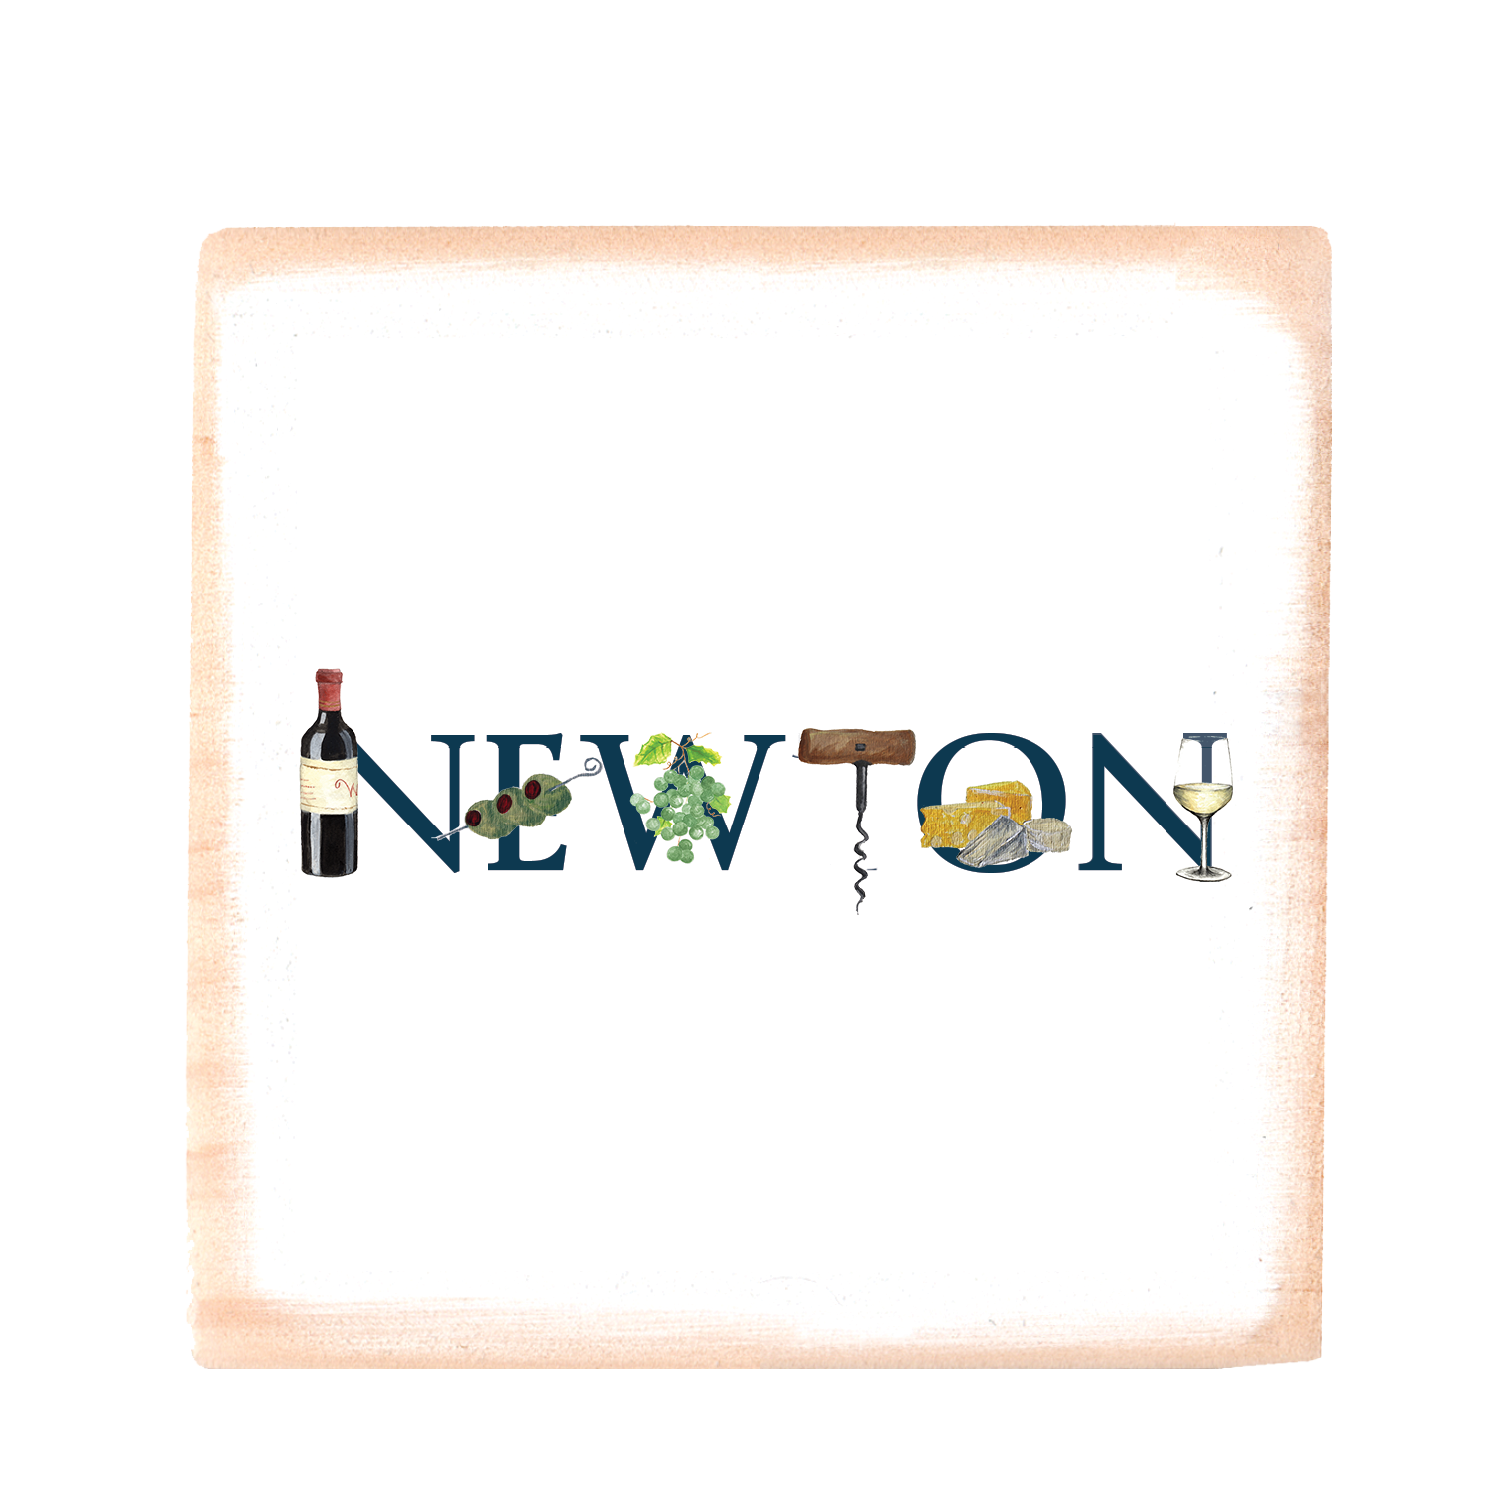 newton square wood block